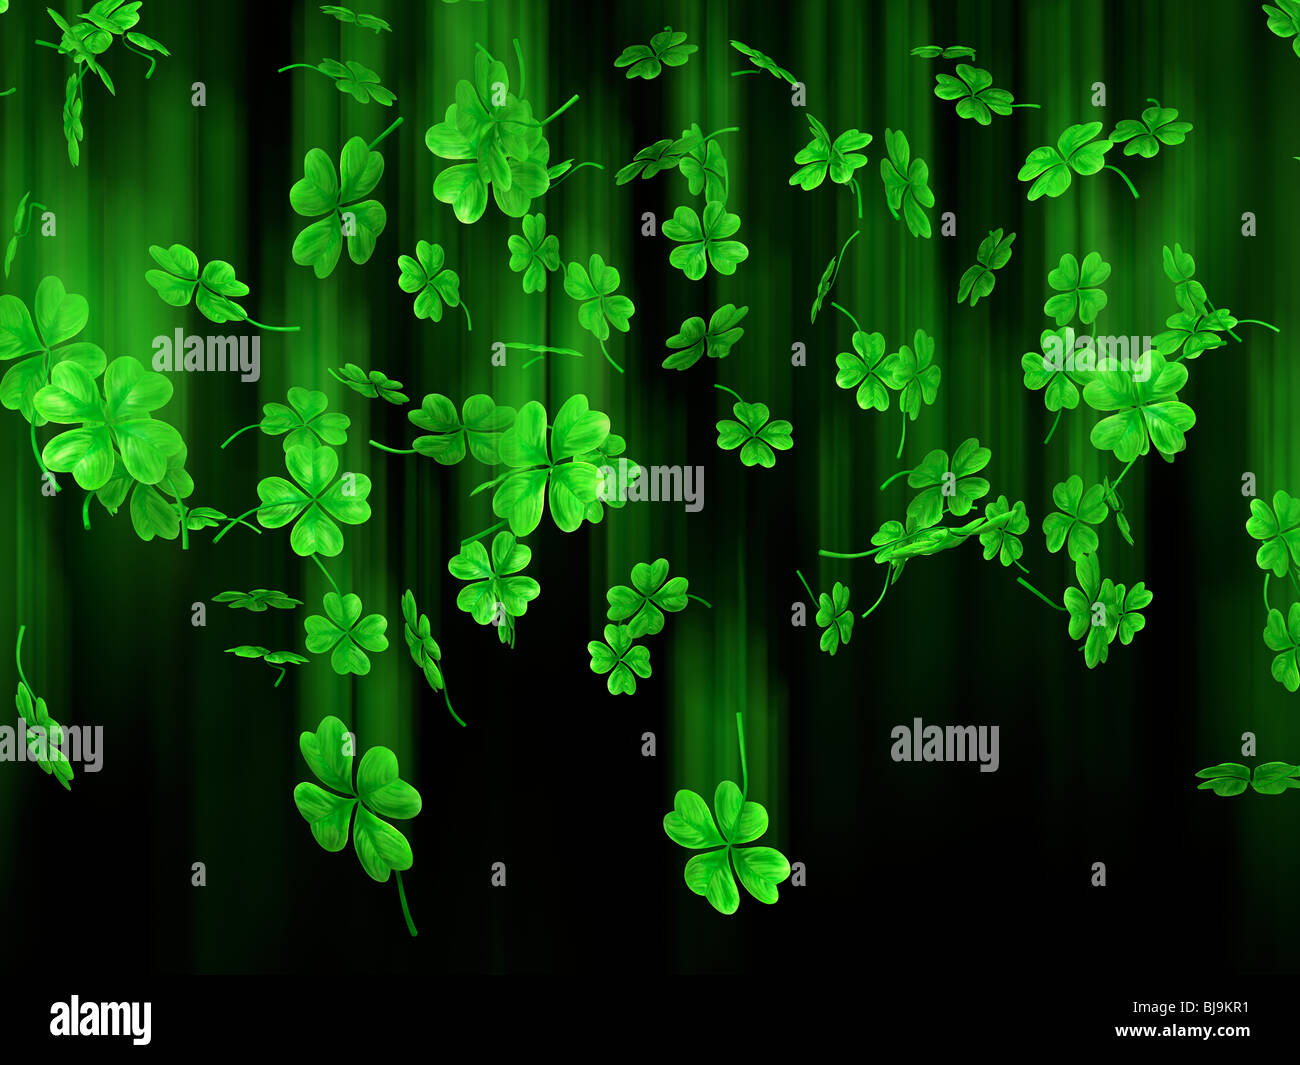 3D illustration of falling shamrock leaves Saint Patrick's day symbol isolated on black background Stock Photo